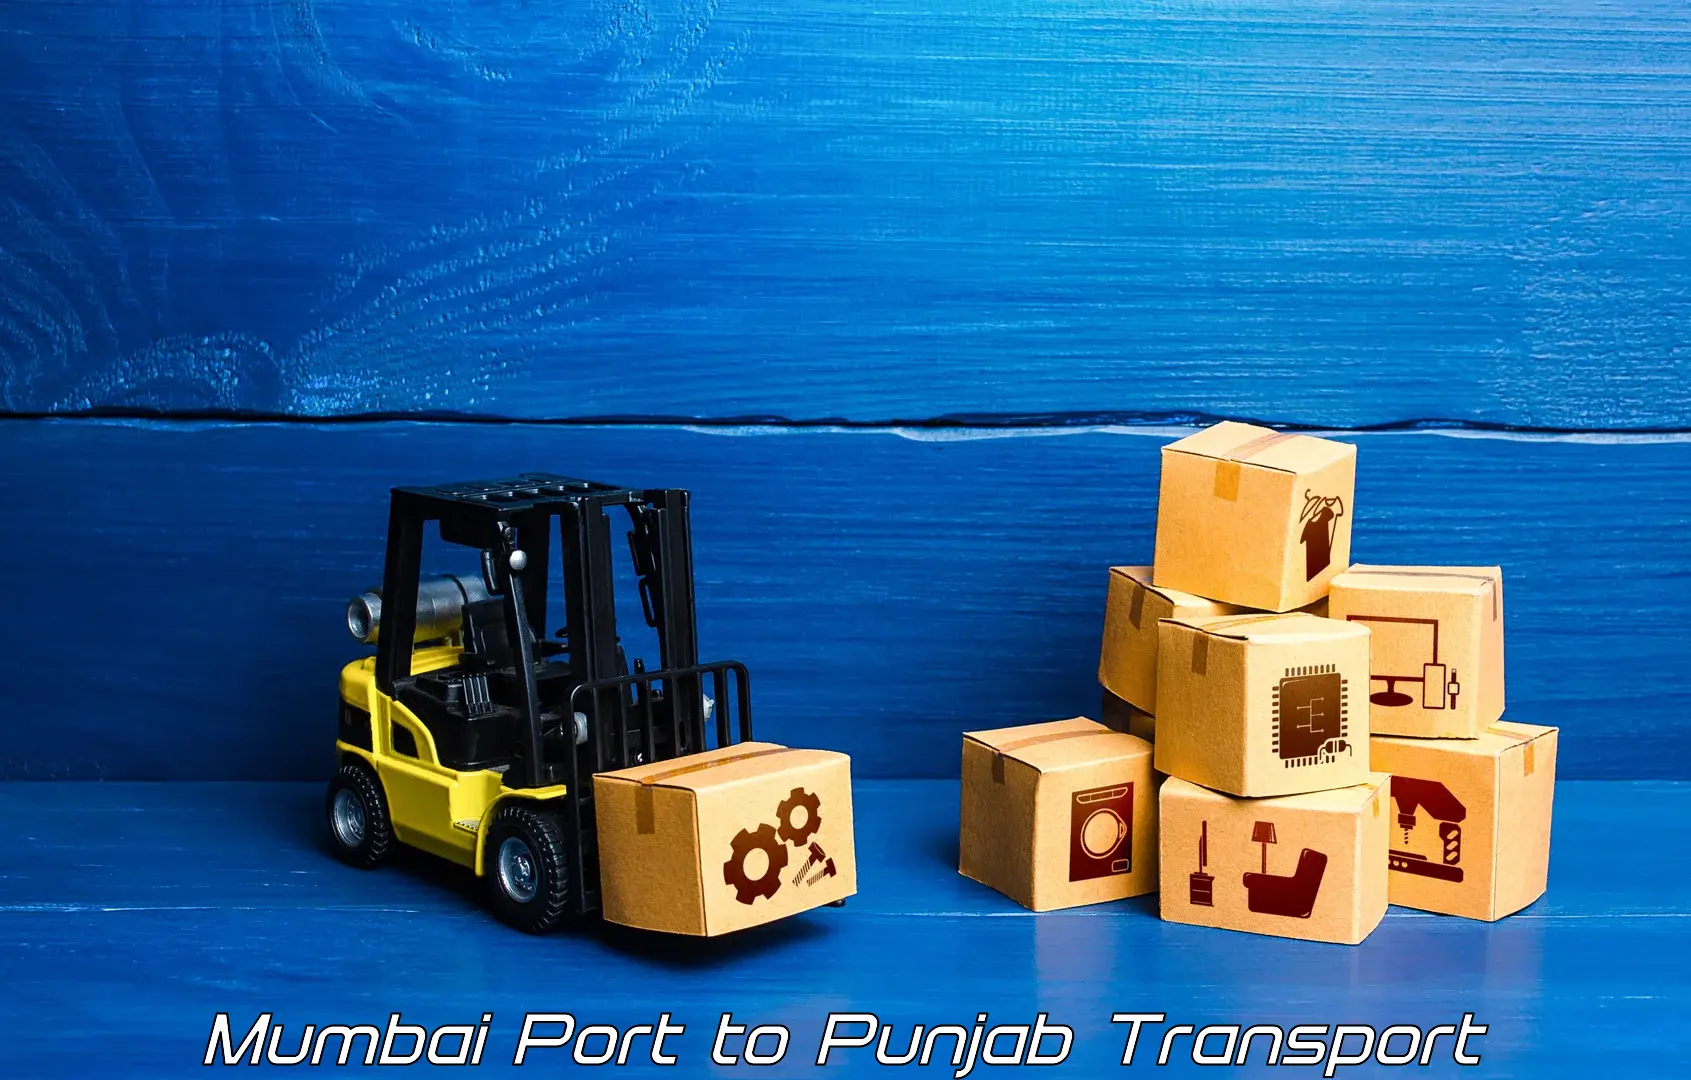 Part load transport service in India Mumbai Port to Talwandi Sabo